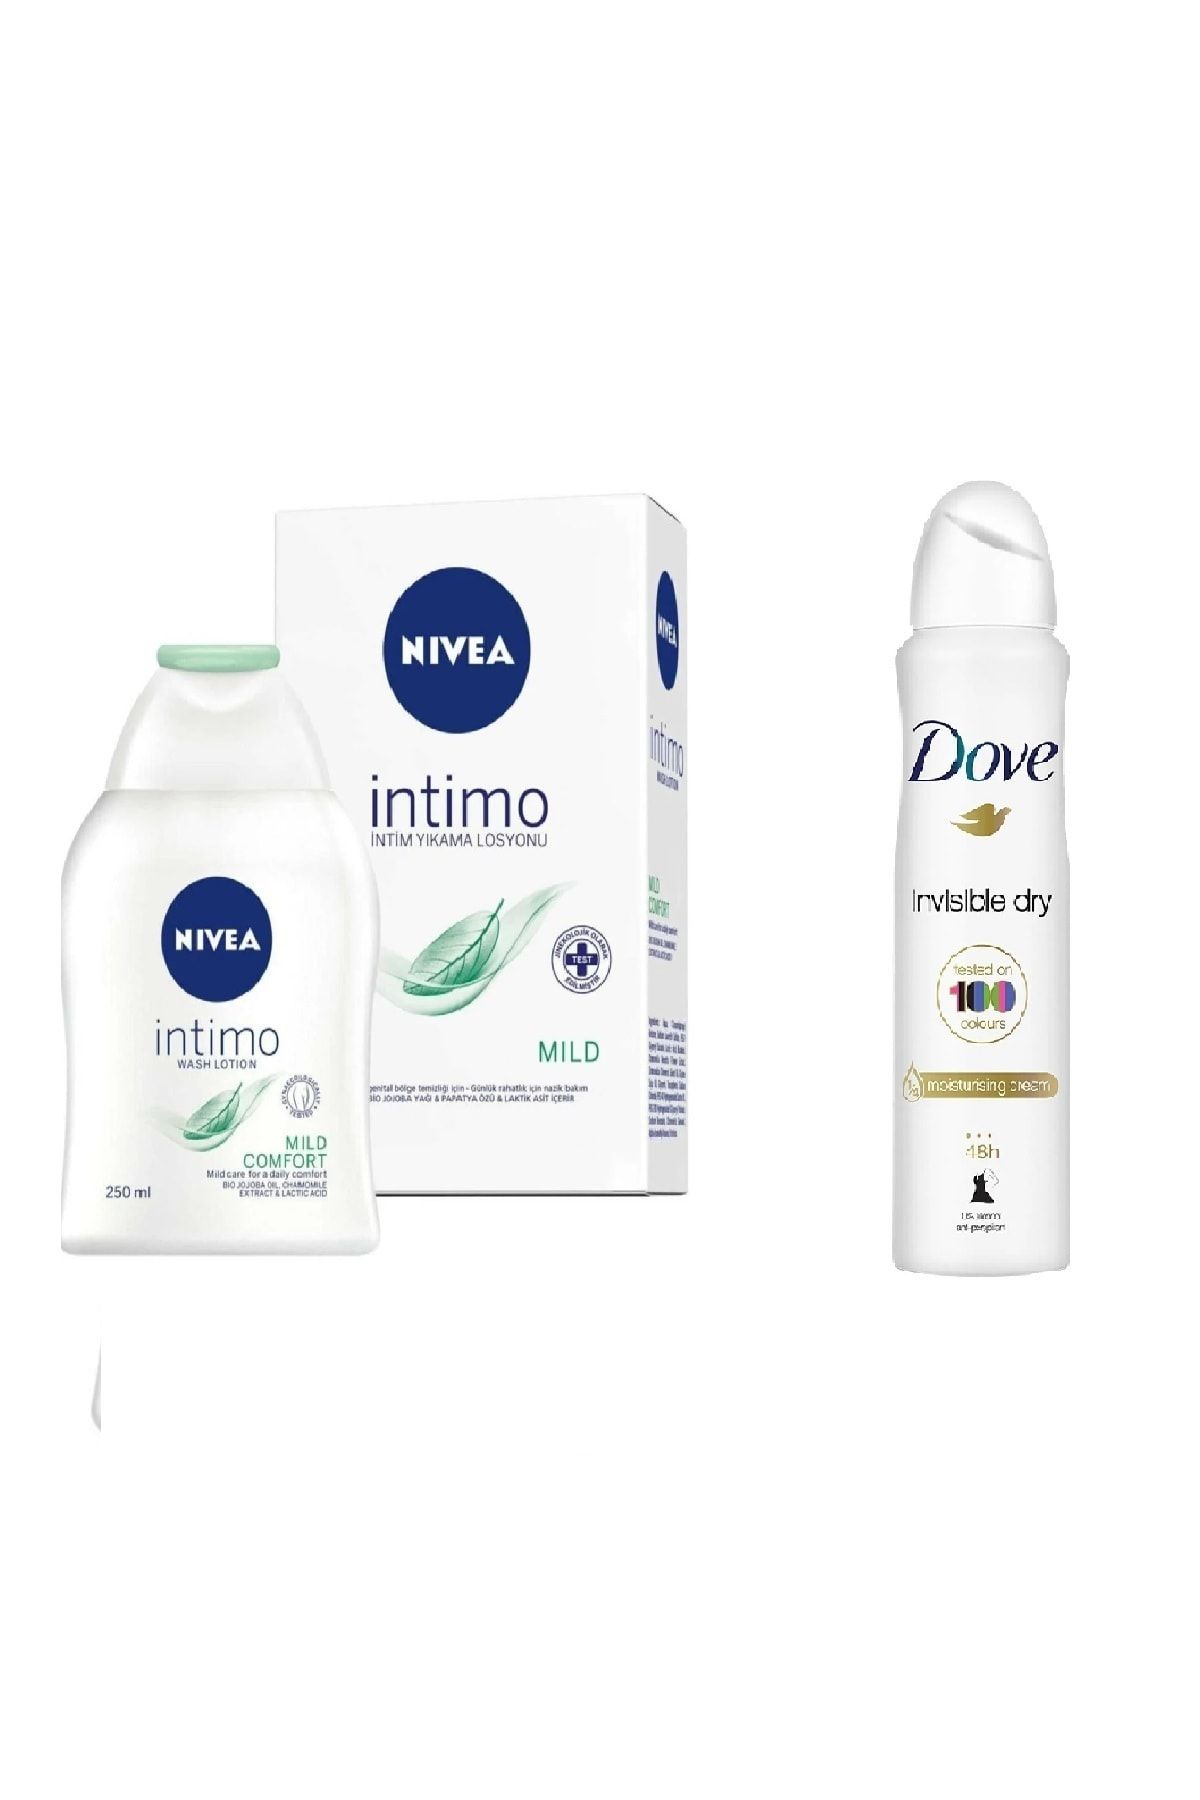 NIVEA Intimo Mild Comfort Intim Yikama Losyonu 250ml + Dove Invisible Dry Deodorant 150 Ml Kzmprt